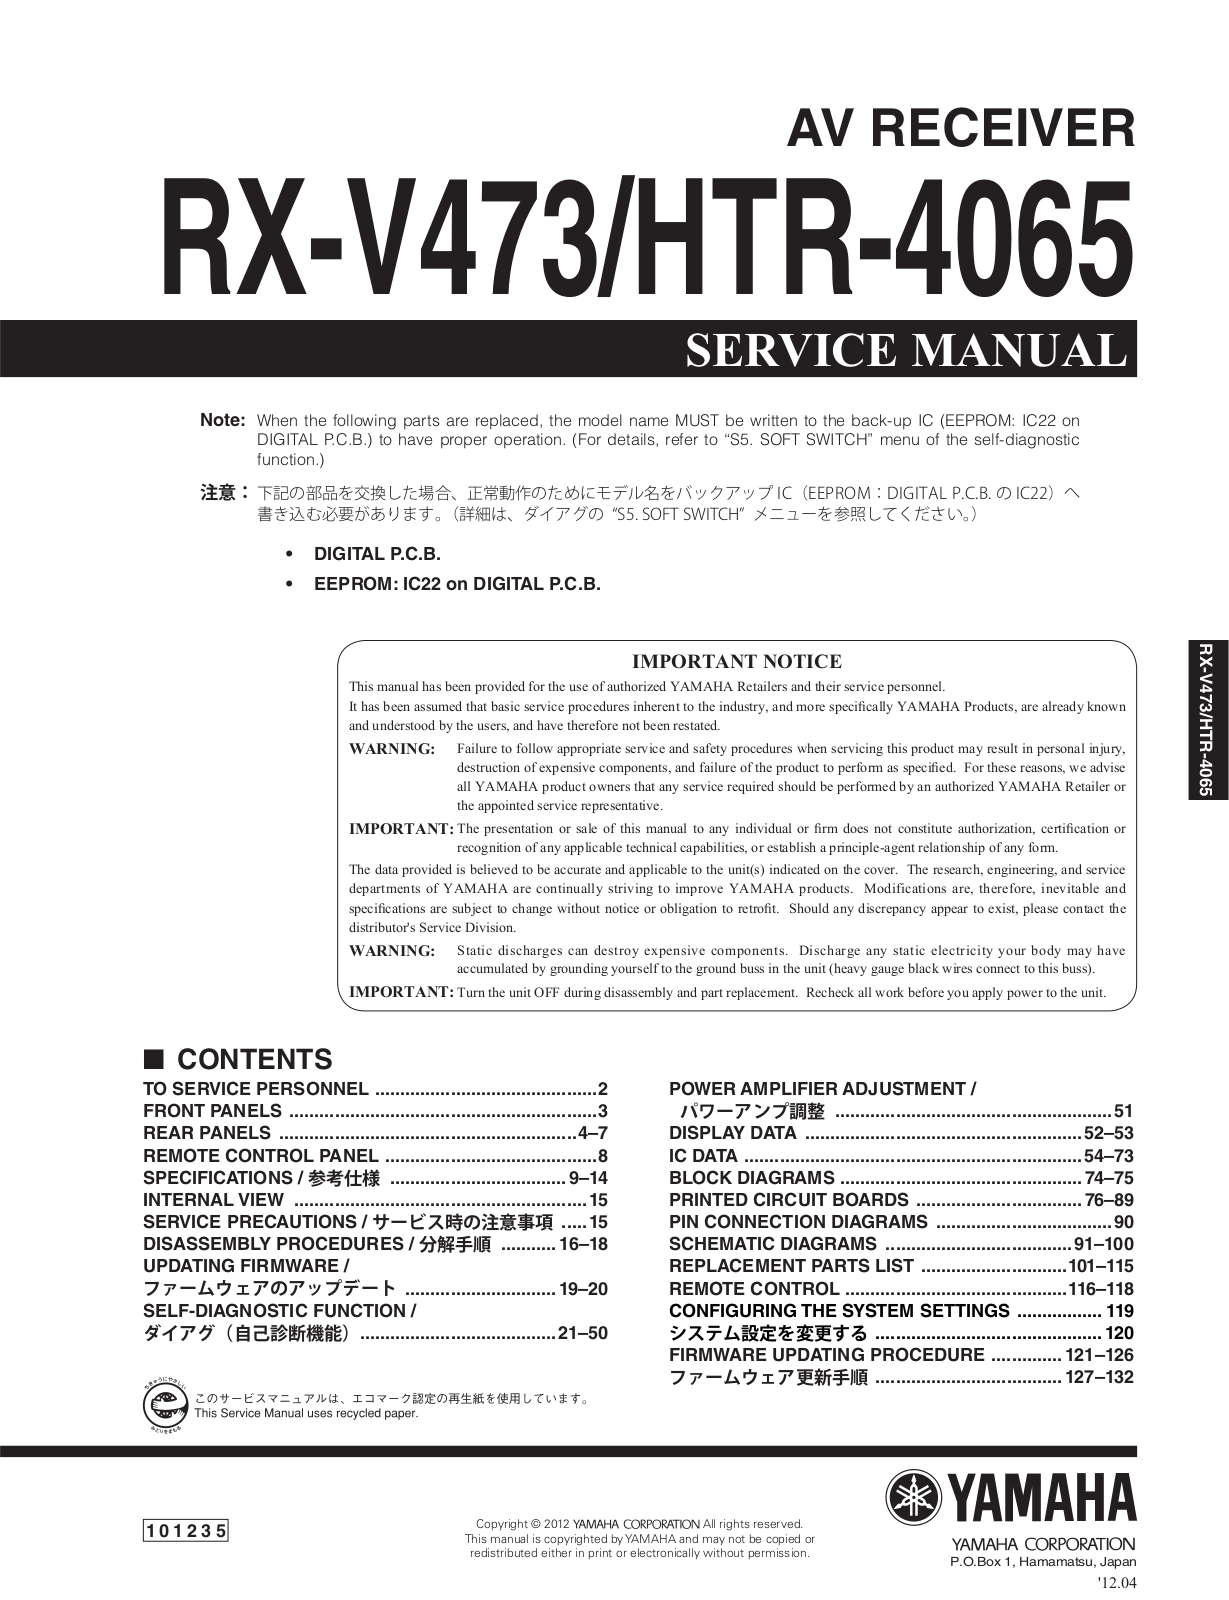 Yamaha RX-V473, HTR-4065 Service manual